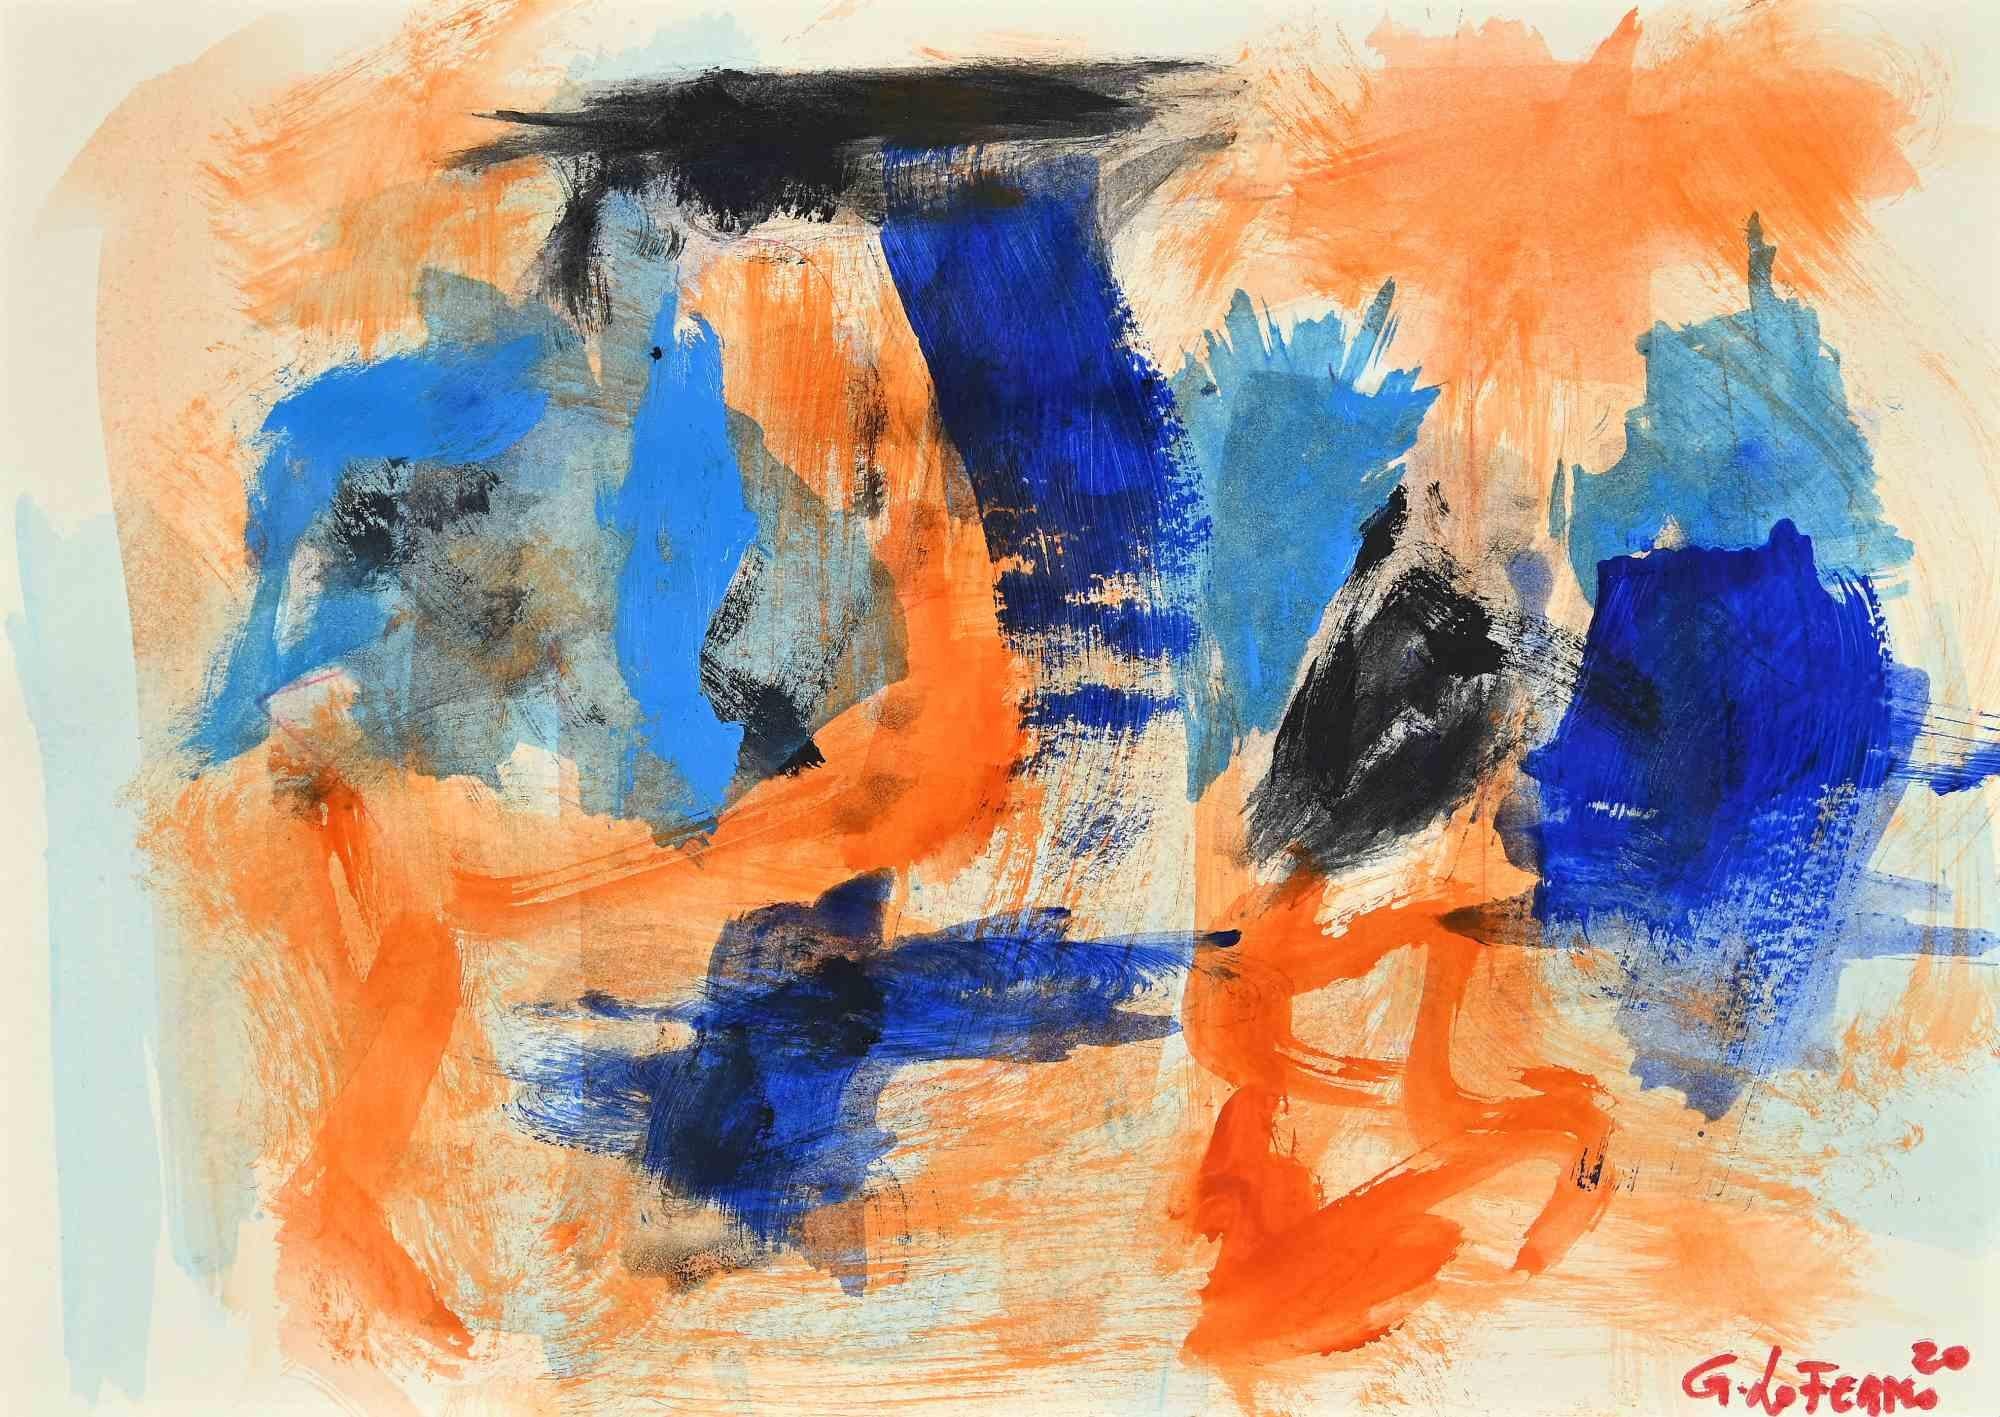 Composition abstraite - Tempera et aquarelle de Giorgio Lo Fermo - 2020